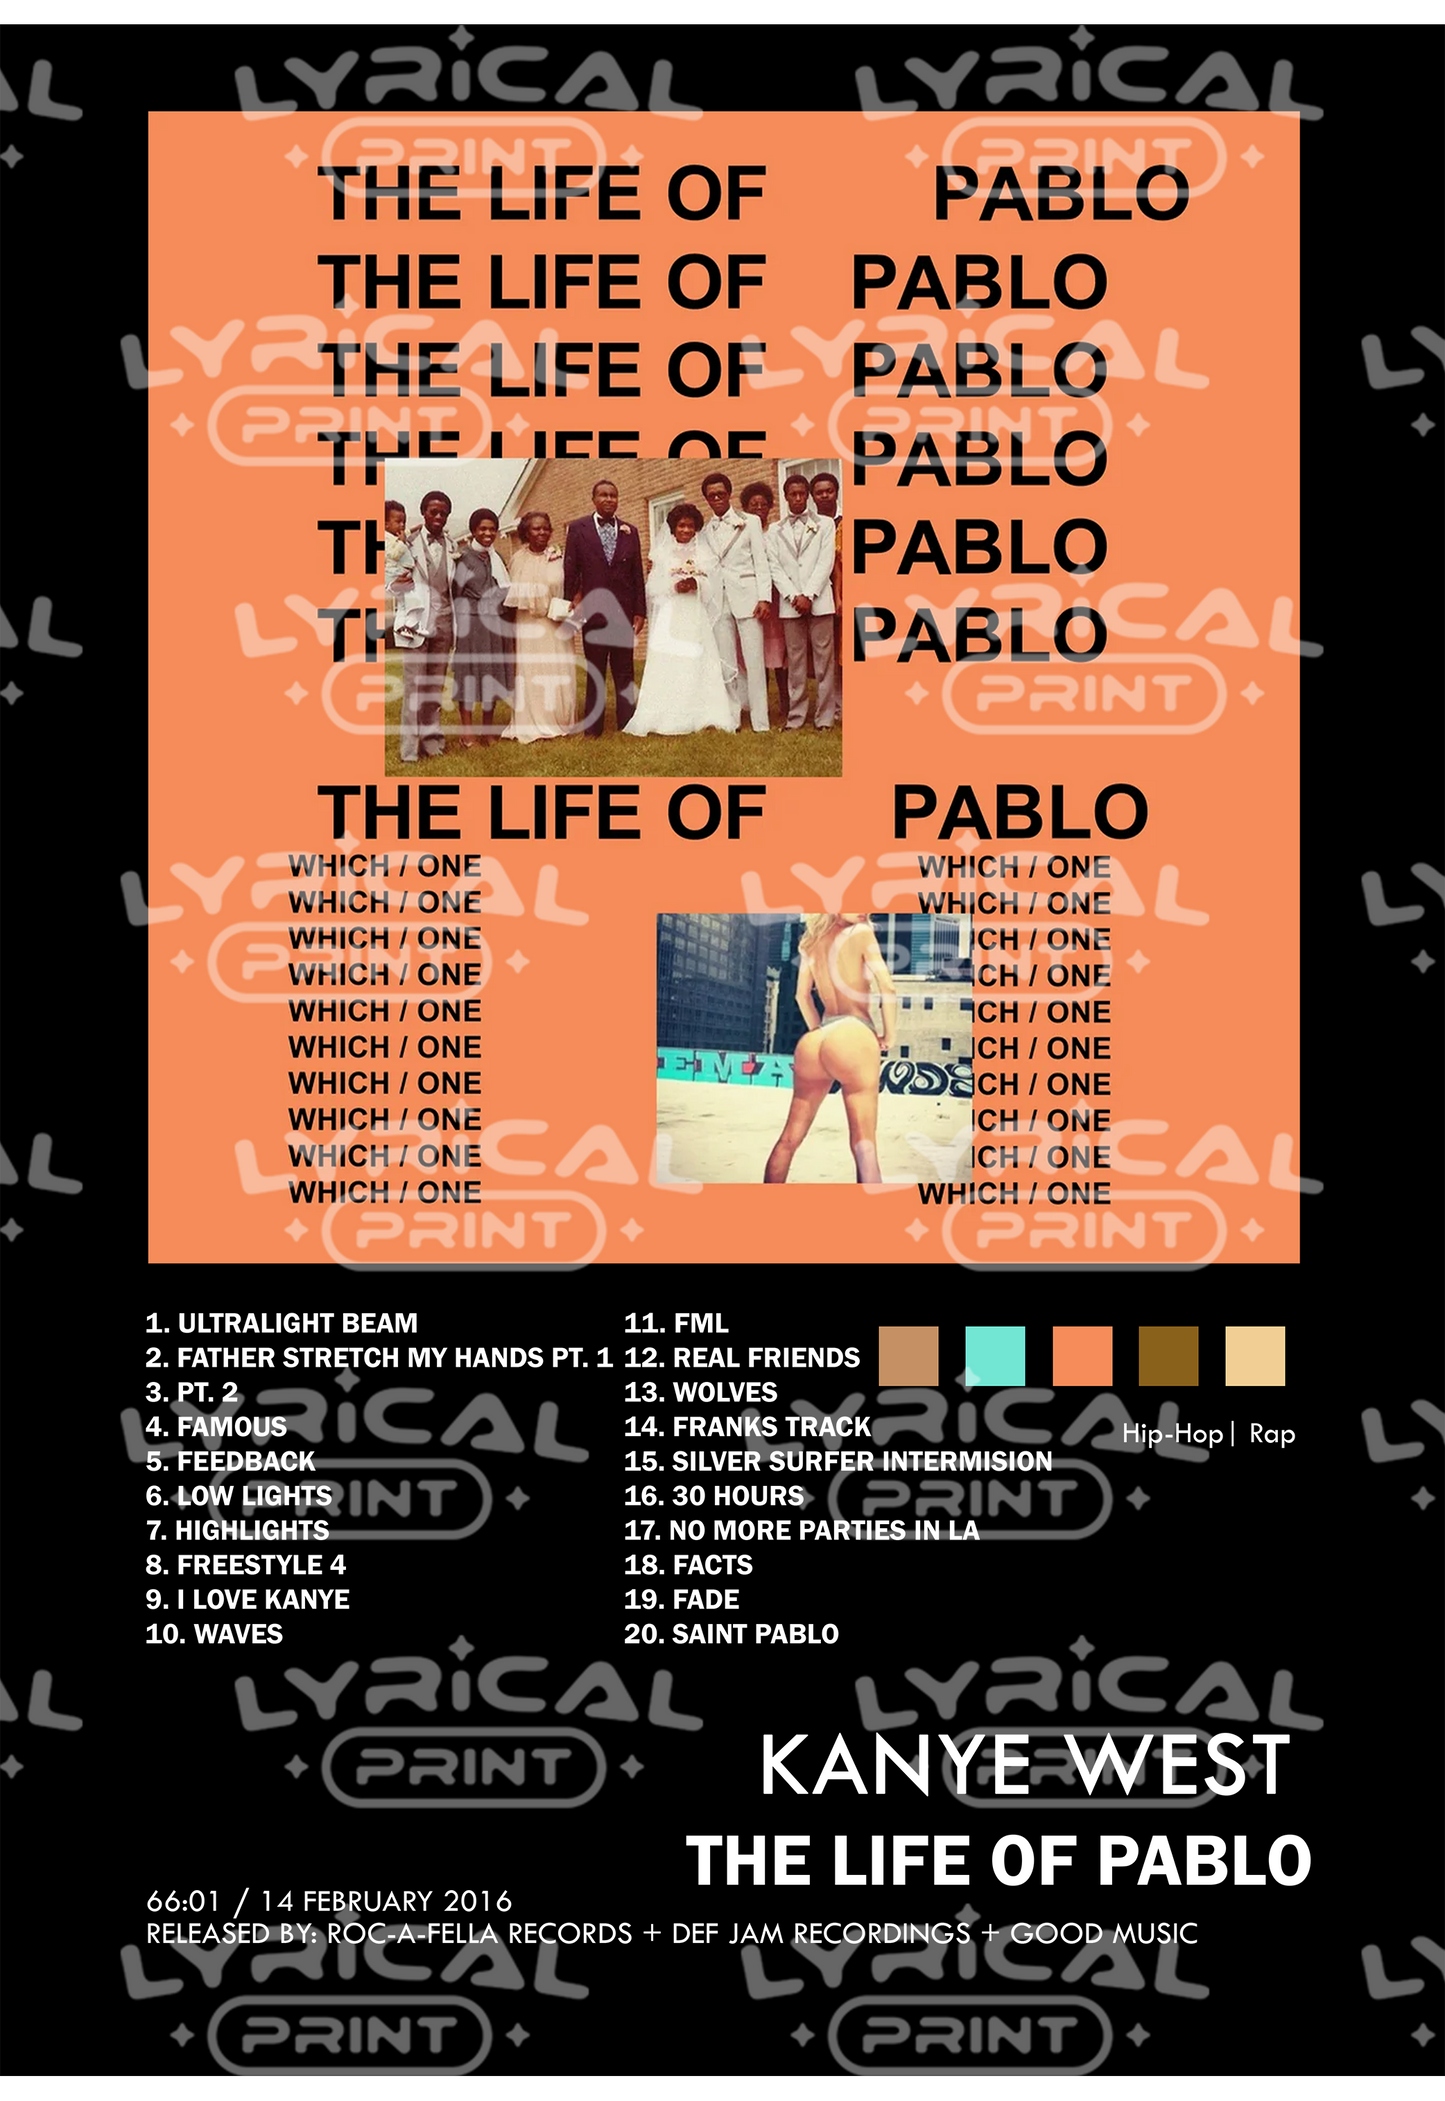 Kanye West - THE LIFE OF PABLO